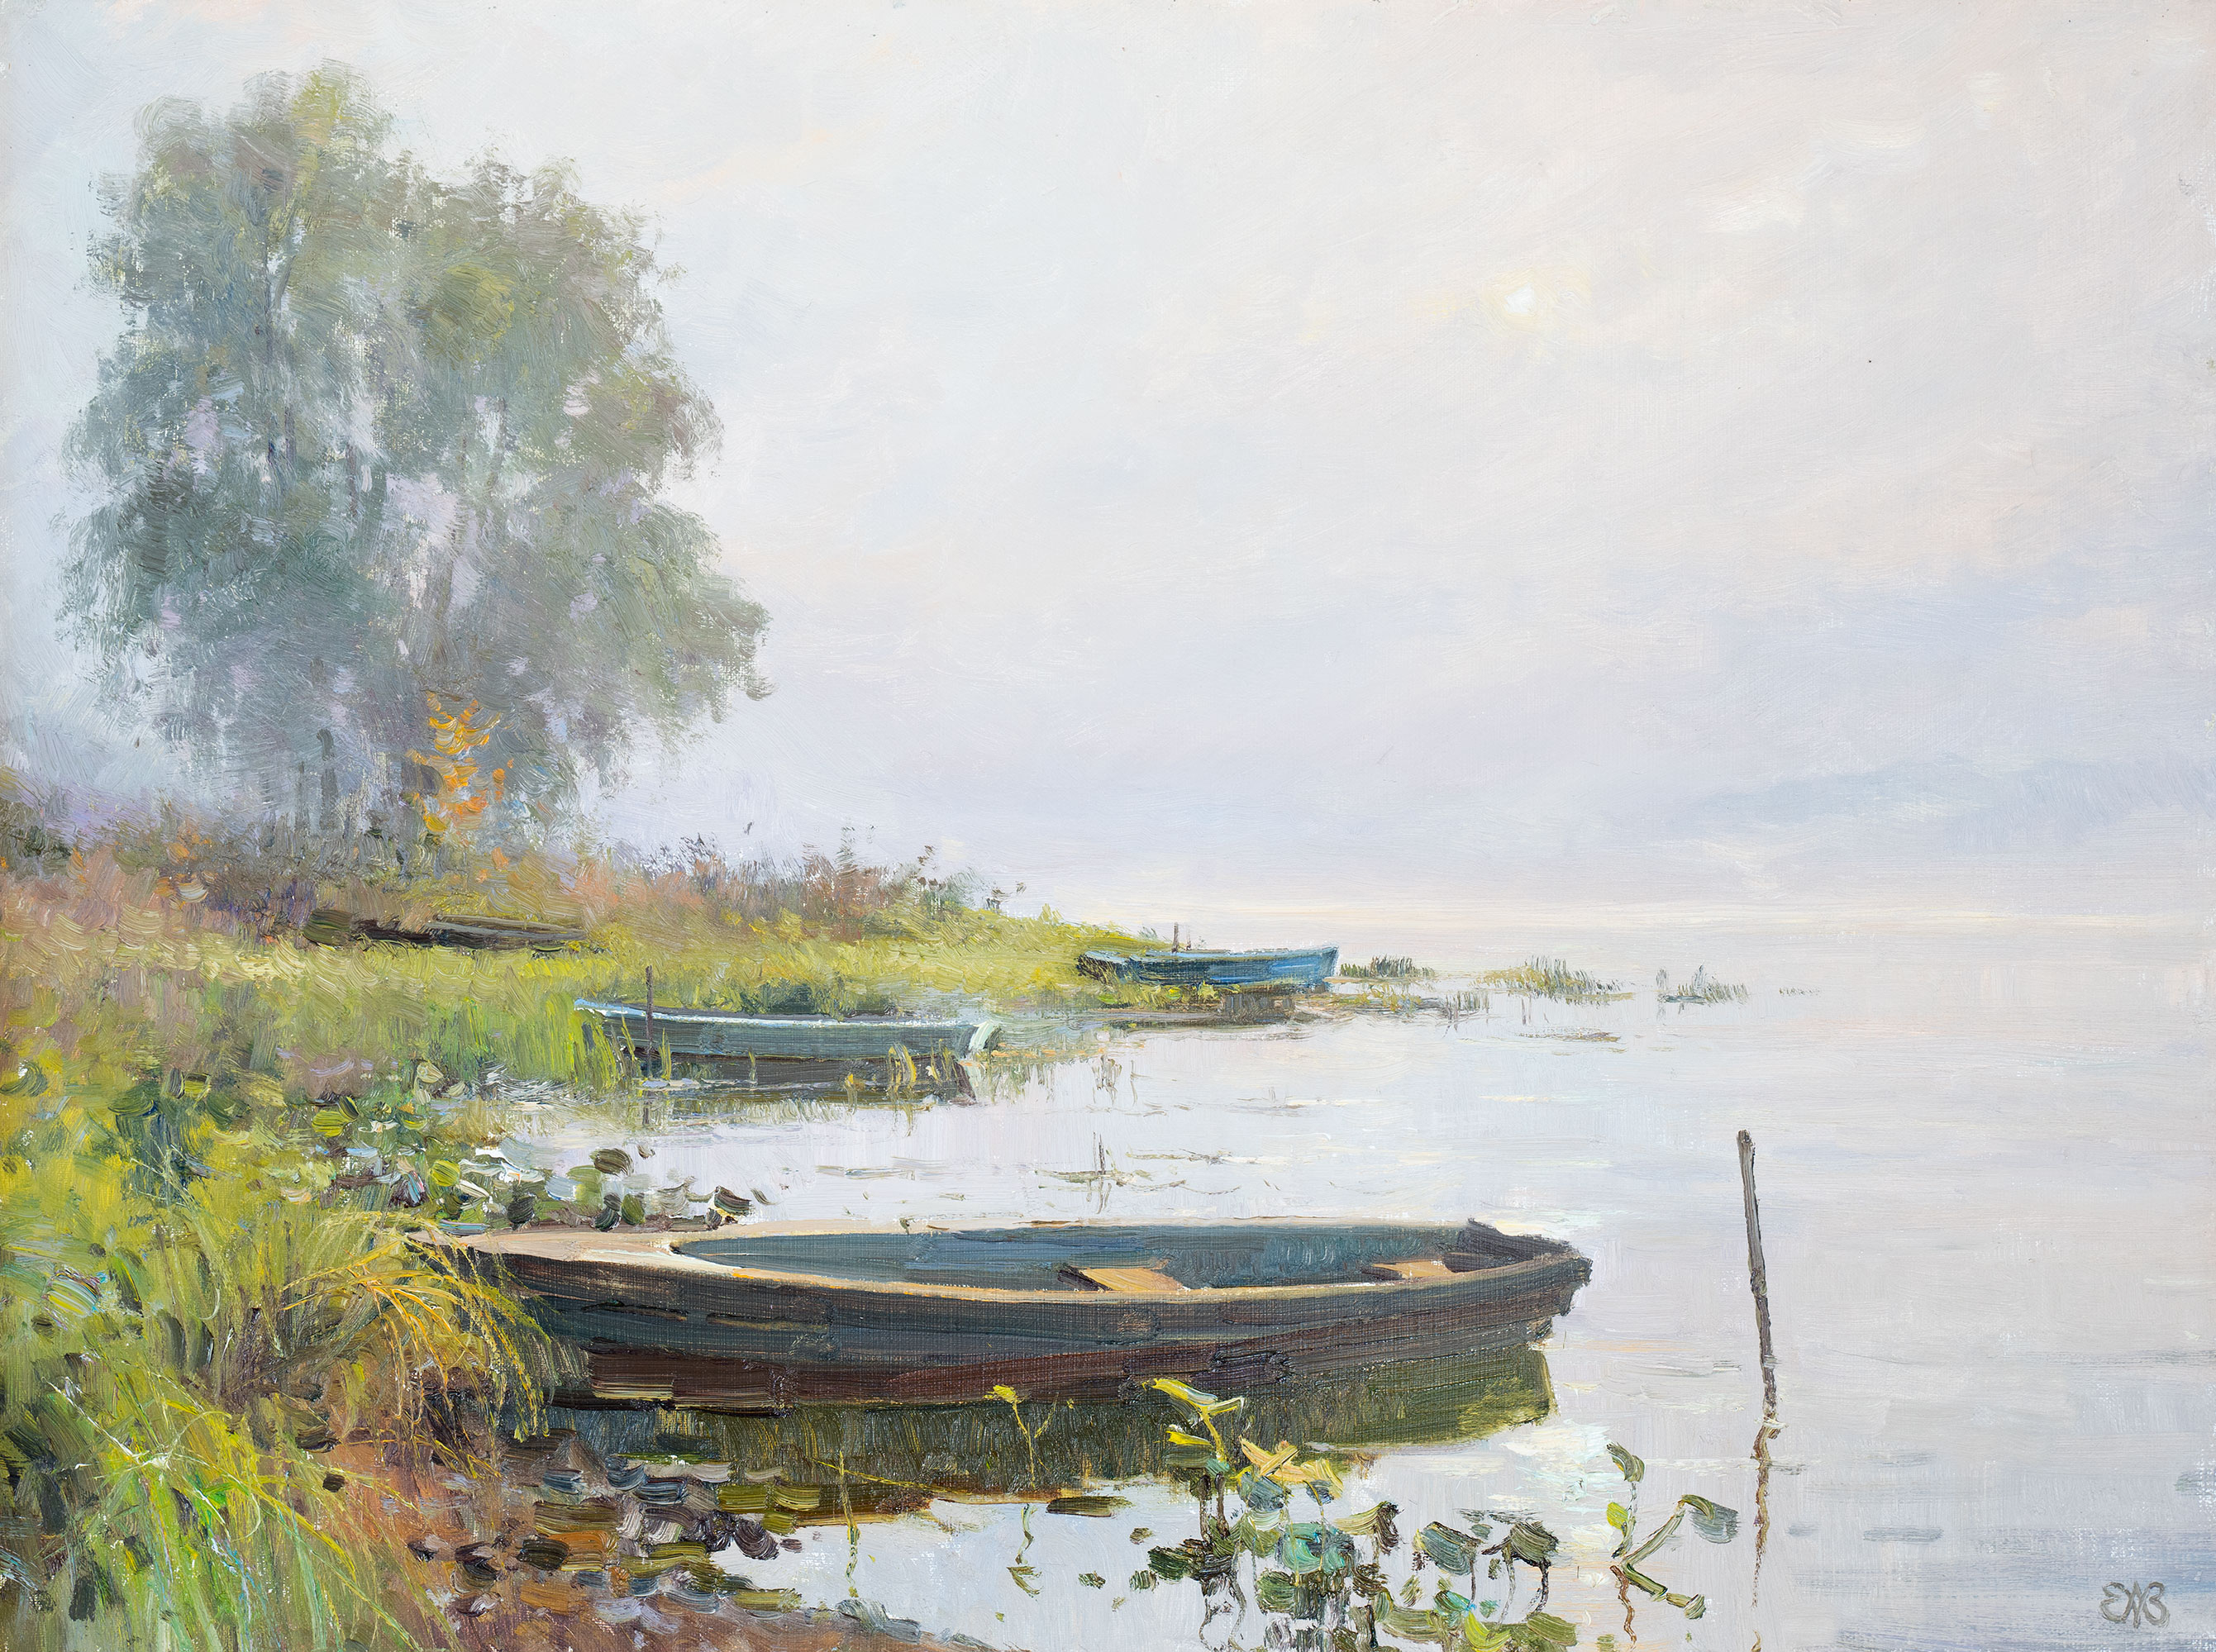 Batka-Don - 1, Alexey Efremov, Buy the painting Oil